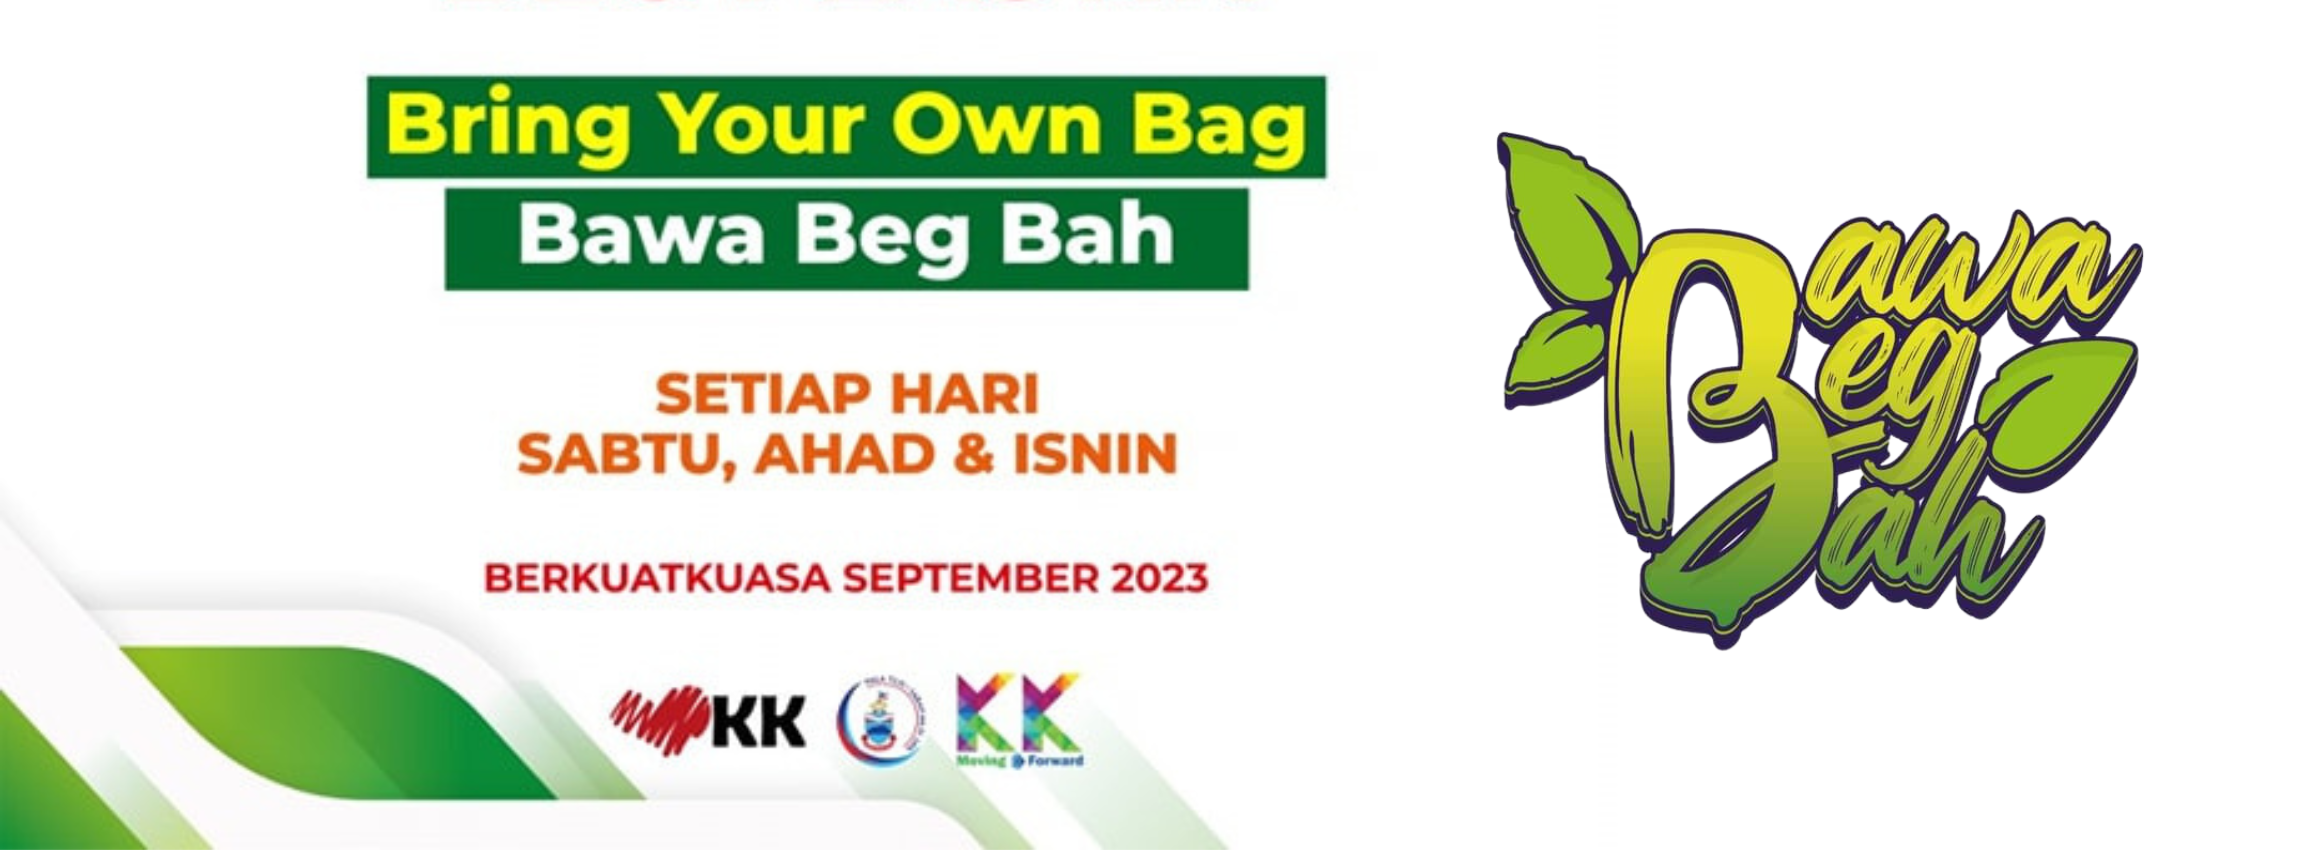 Kempen Pengurangan Beg Plastik - Bring Your Own Bag